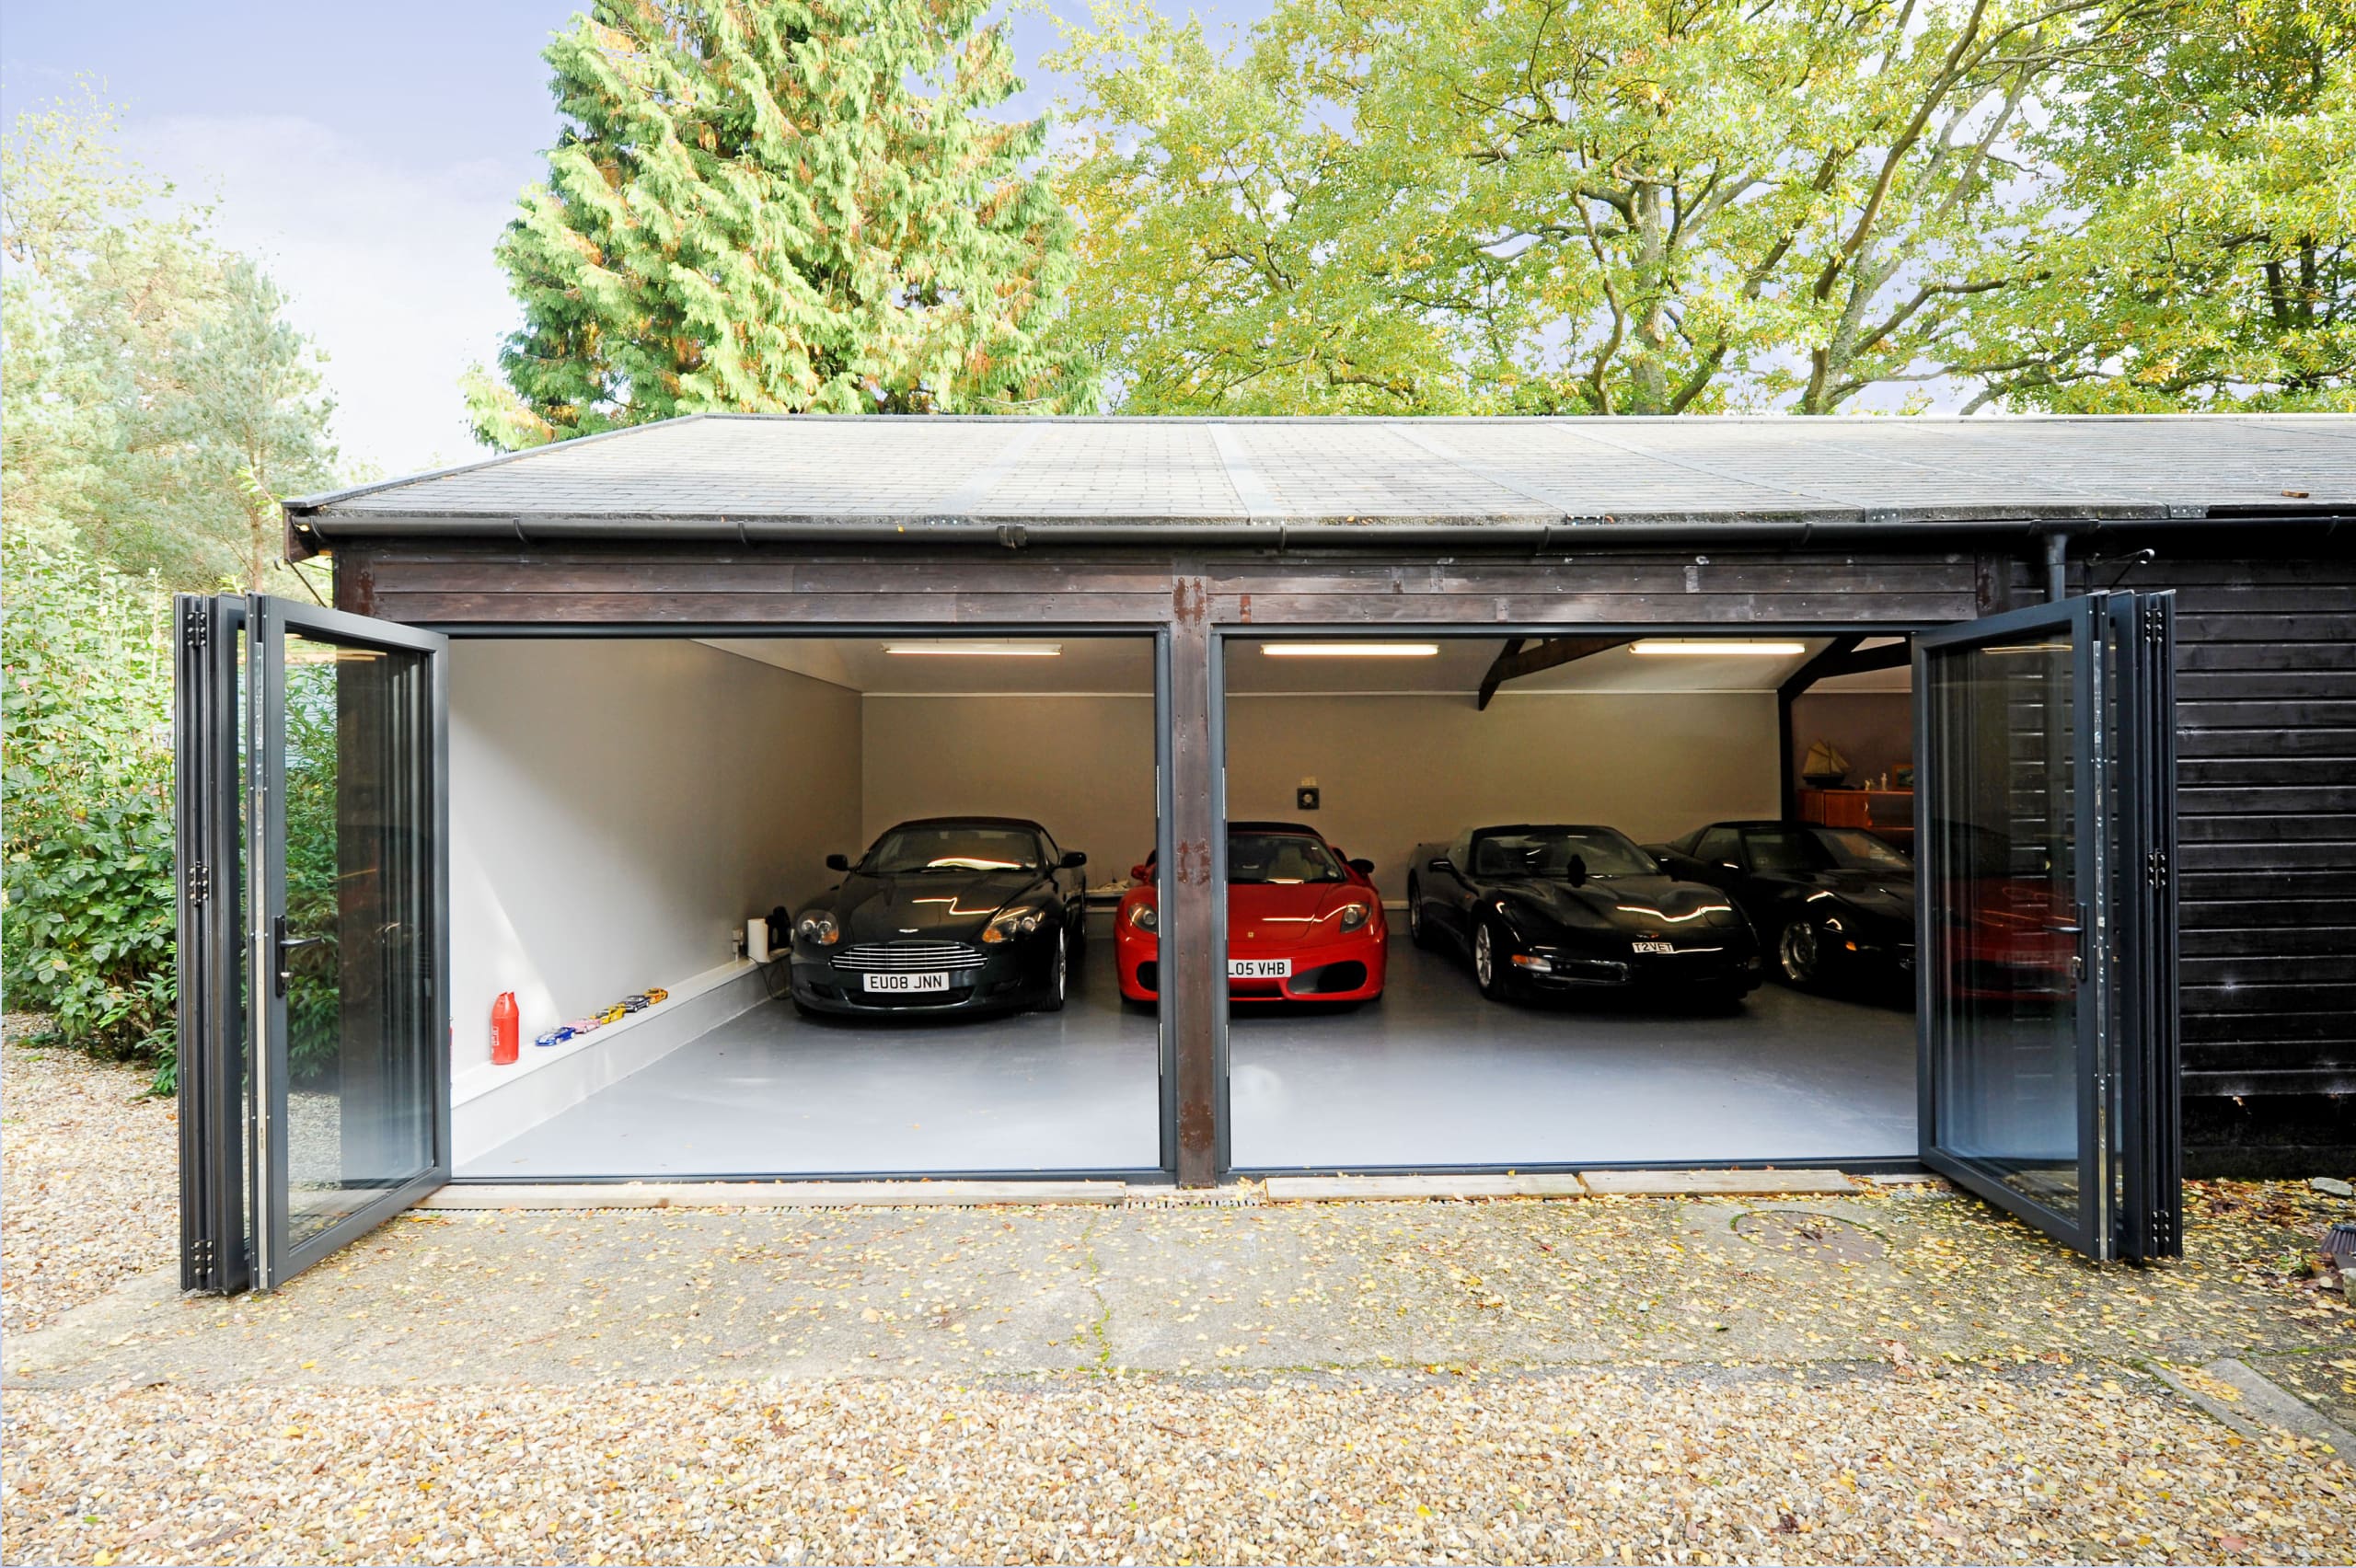 Garage housing super cars and bifolding doors.